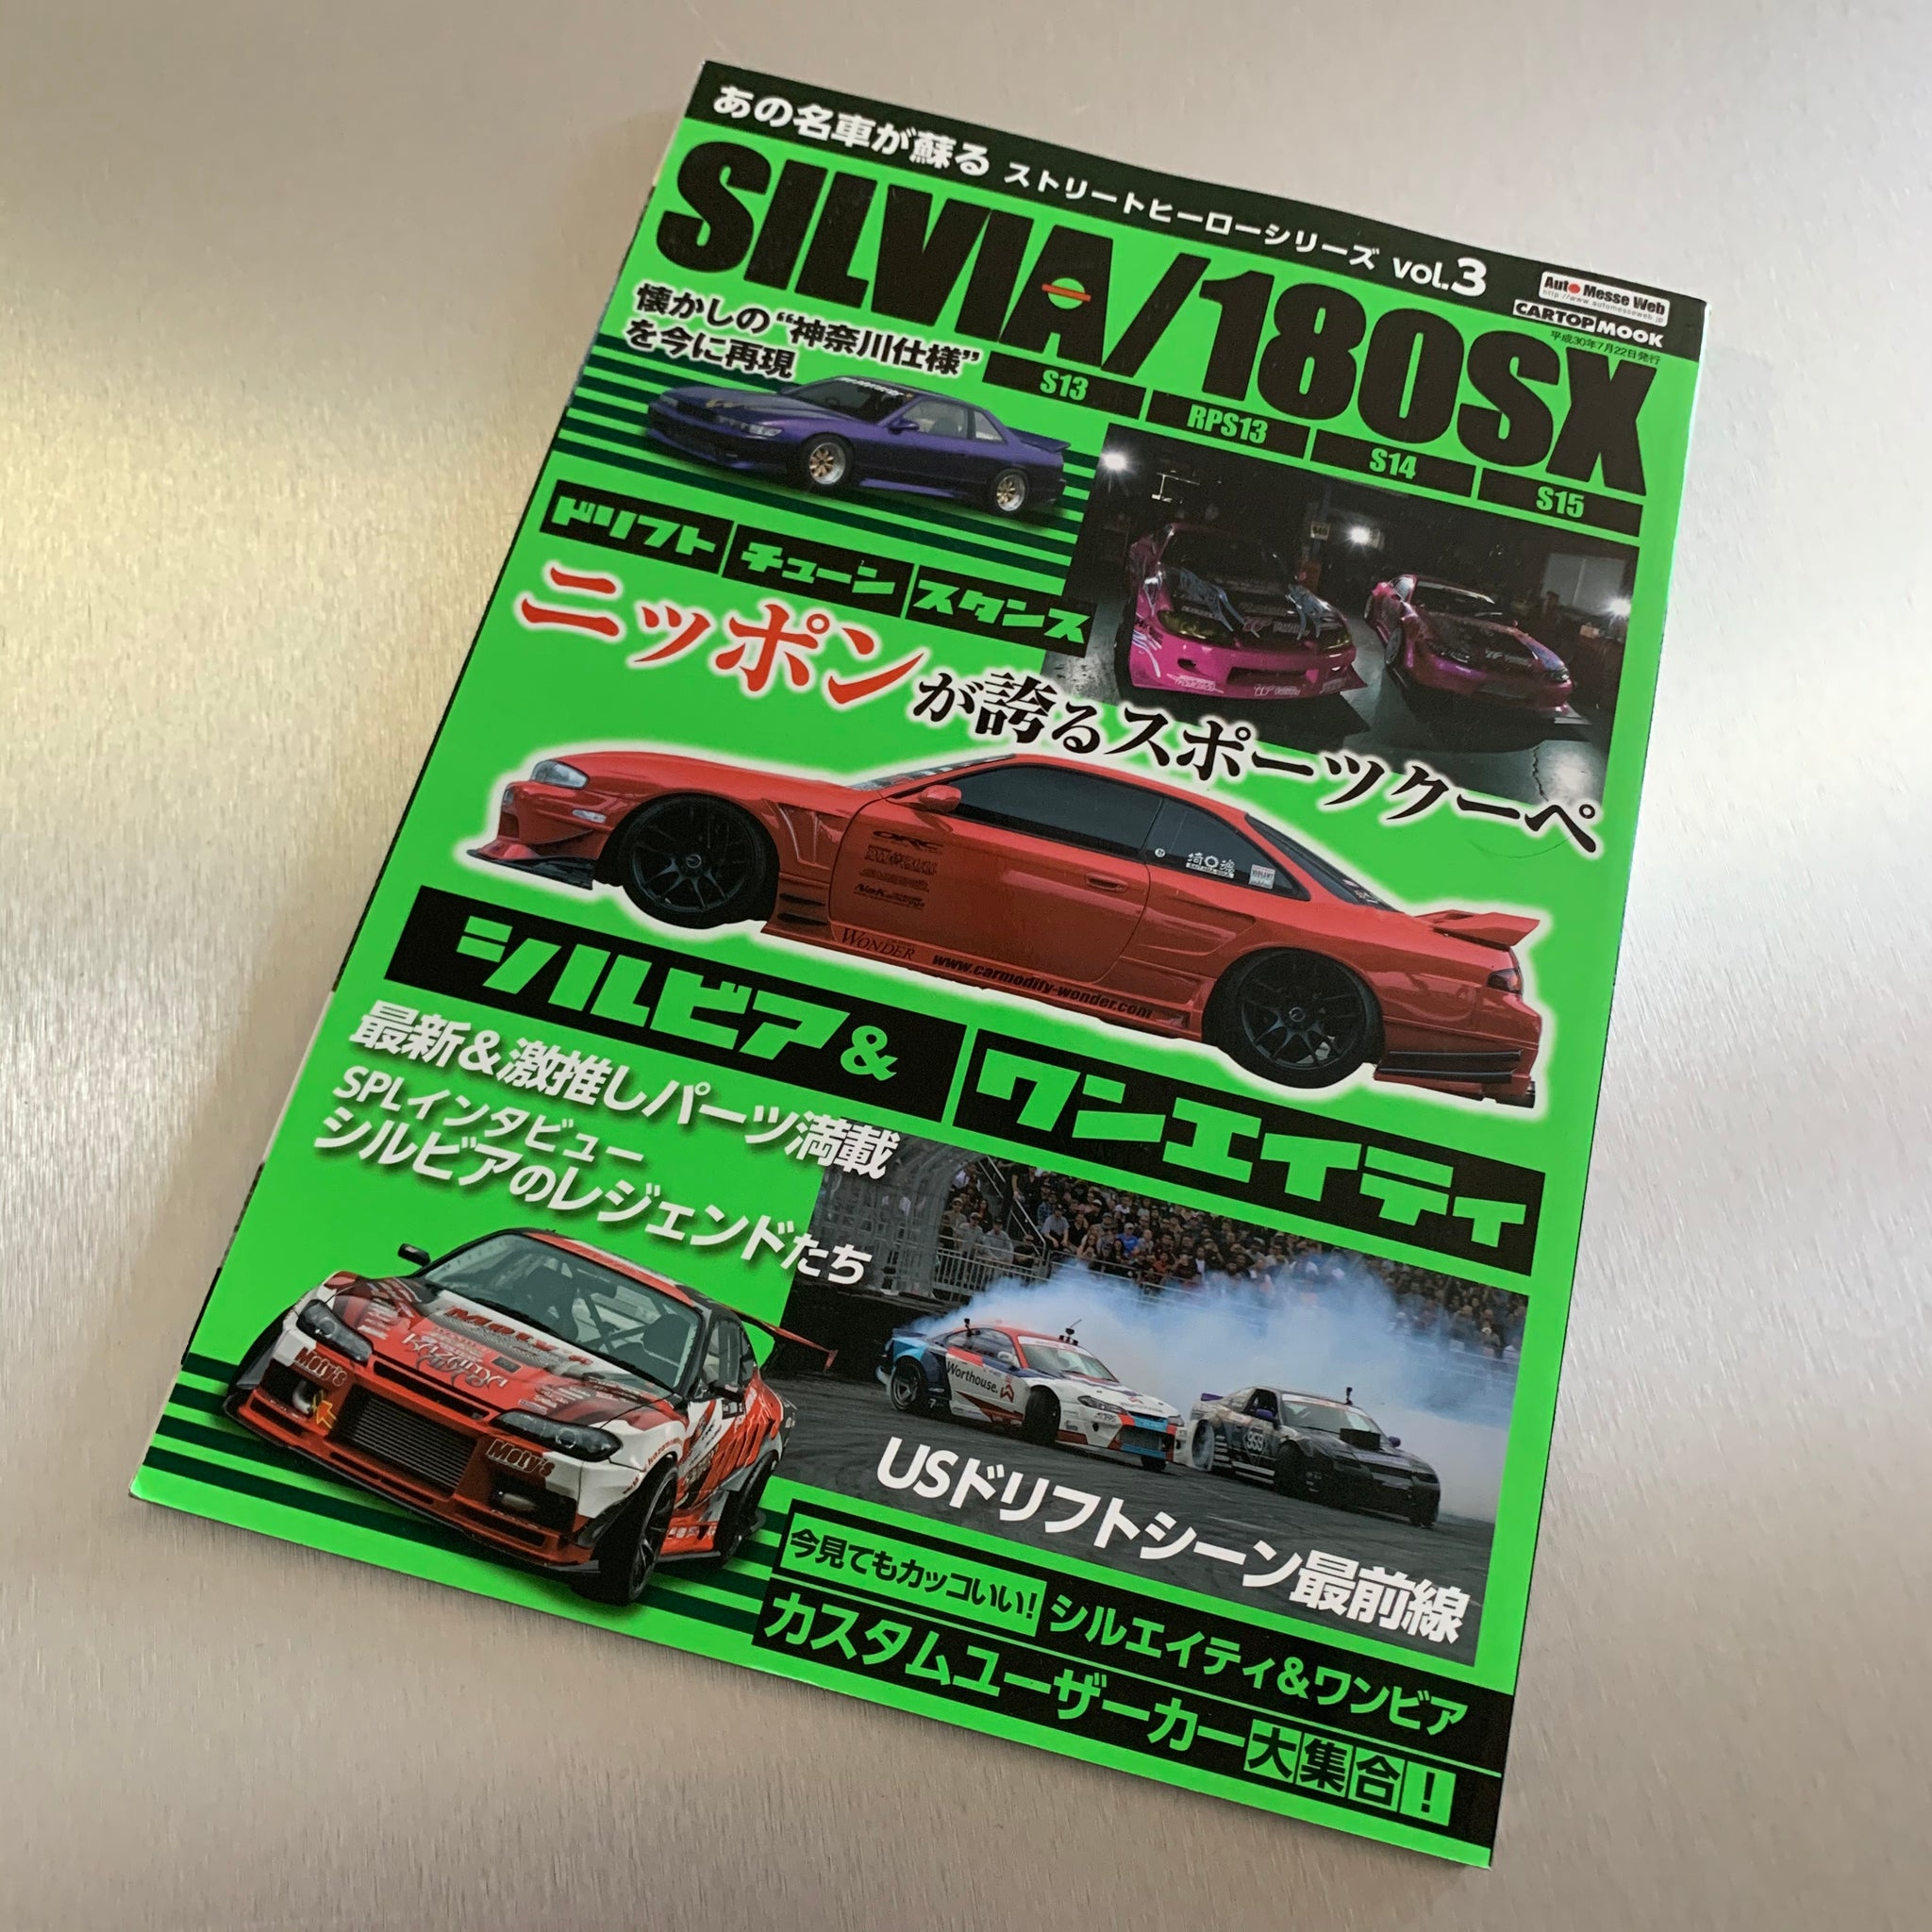 Street Hero Series Vol 3 Silvia 180sx S13 S14 S15 Pro Shop Noble